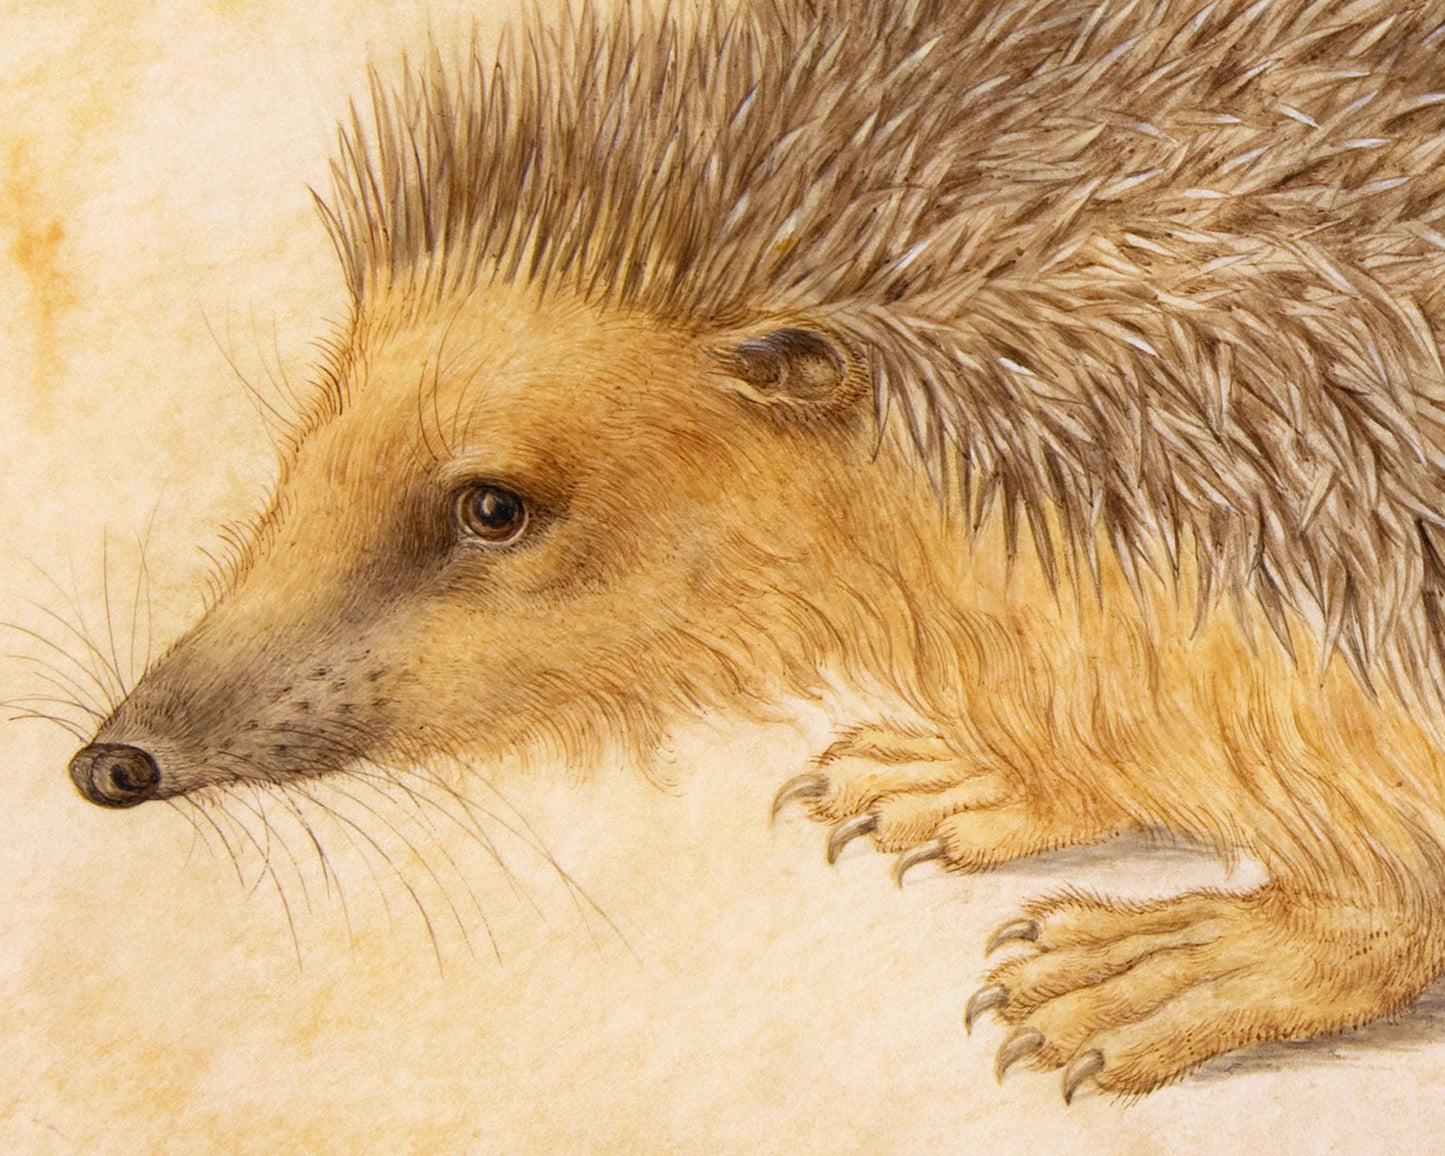 Ancient hedgehog art print | A hedgehog by Hans Hoffman | 16th century animal art | Natural history wall art | Modern vintage décor